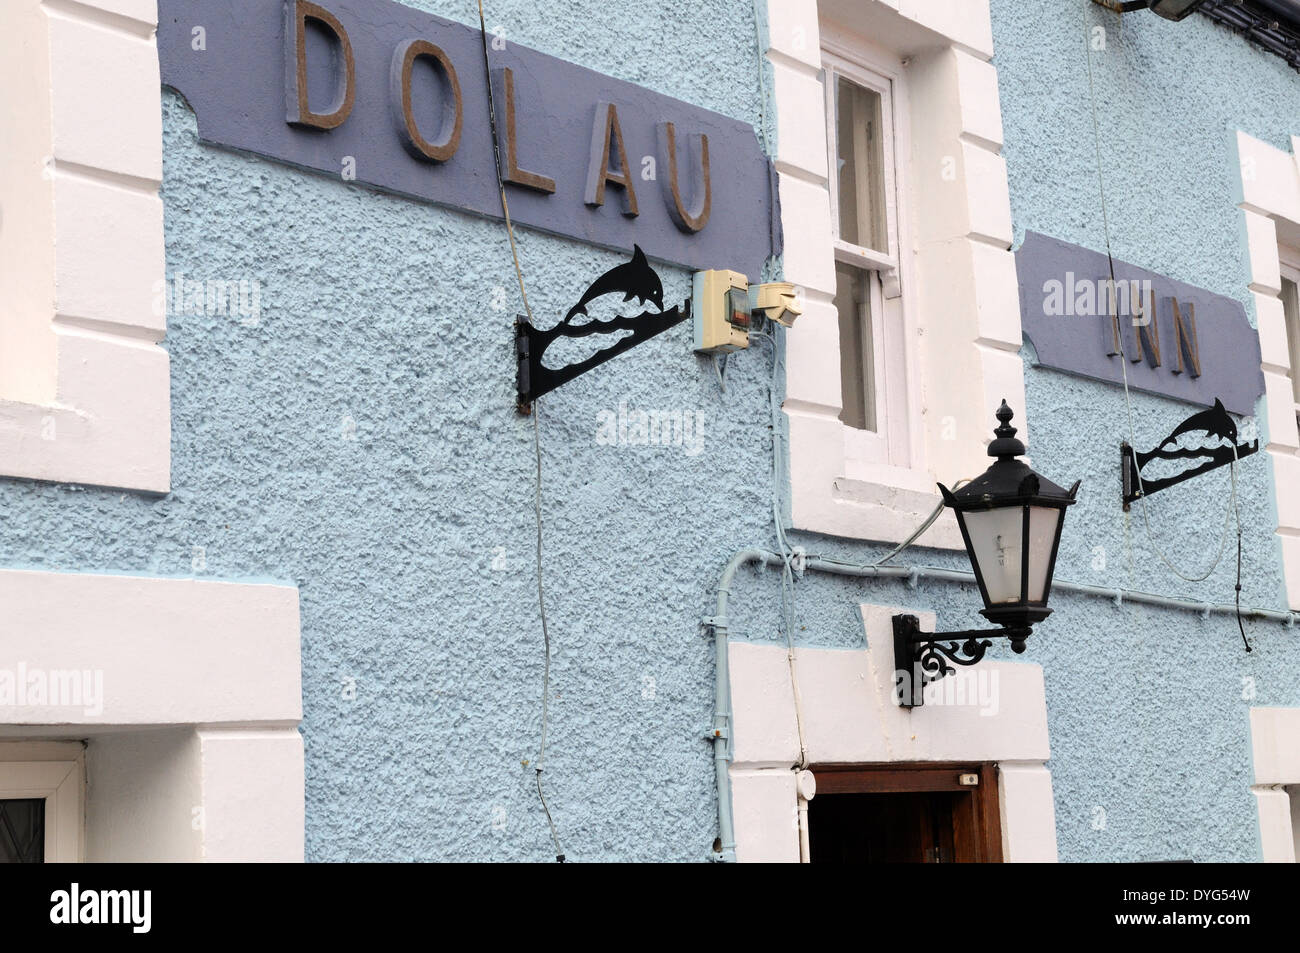 Dolau Inn New Quay angeblich die Stammkneipe von Caitlin Thomas Ceredigion Wales Cymru UK GB Stockfoto